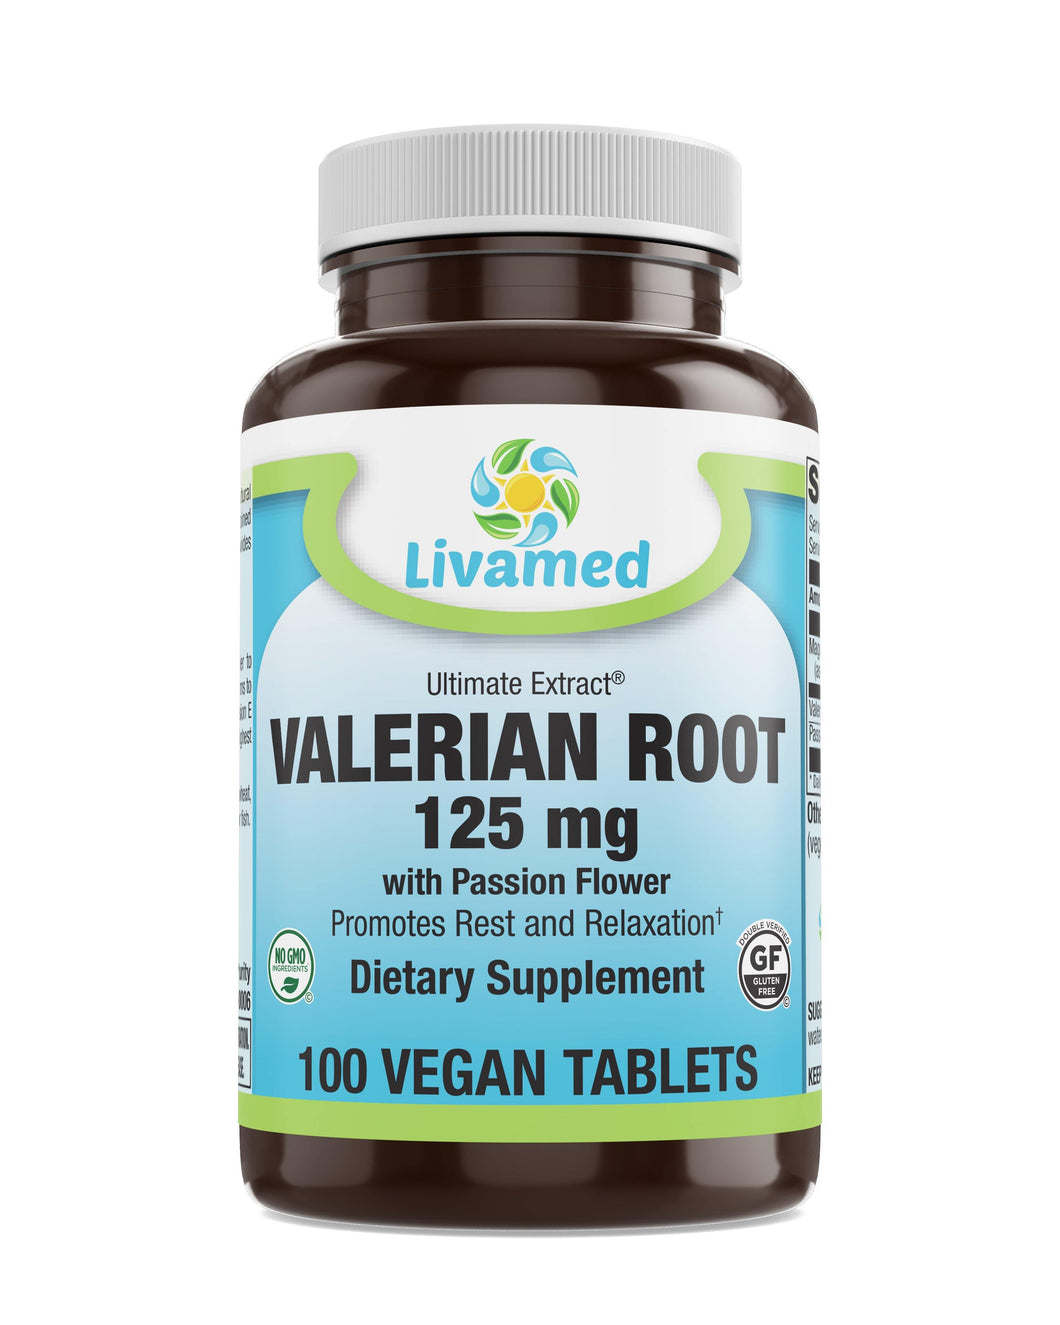 Livamed - Valerian Root 125 mg with Passion Flower Veg Tabs 100 Count - Livamed Vitamins